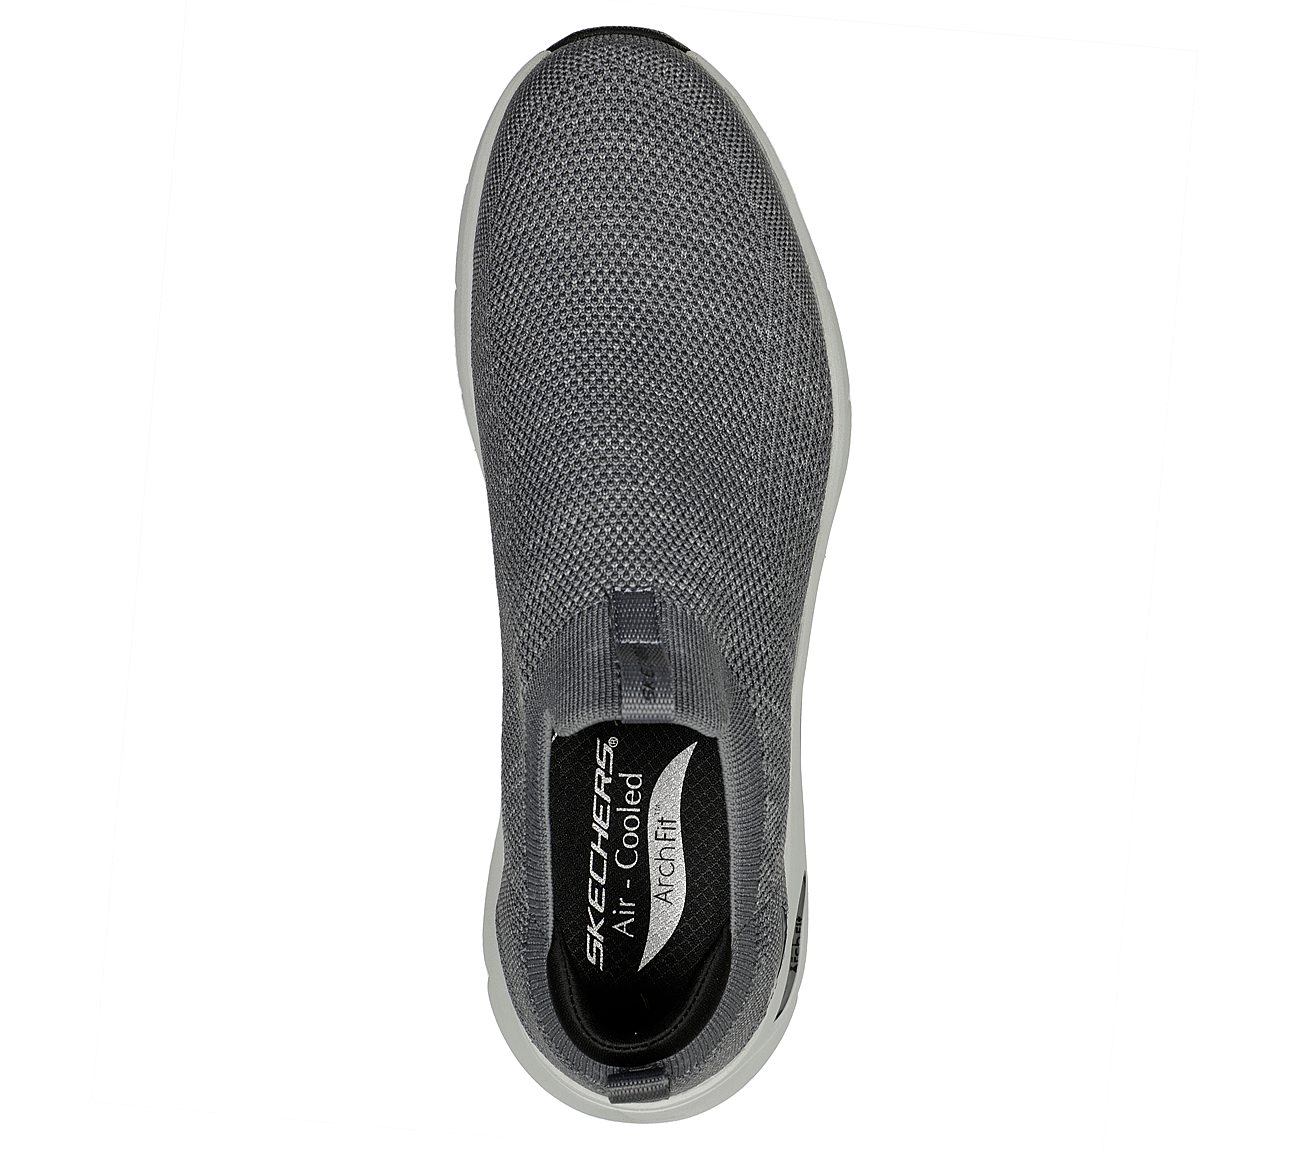 SKECH-AIR ARCH FIT, CCHARCOAL Footwear Top View